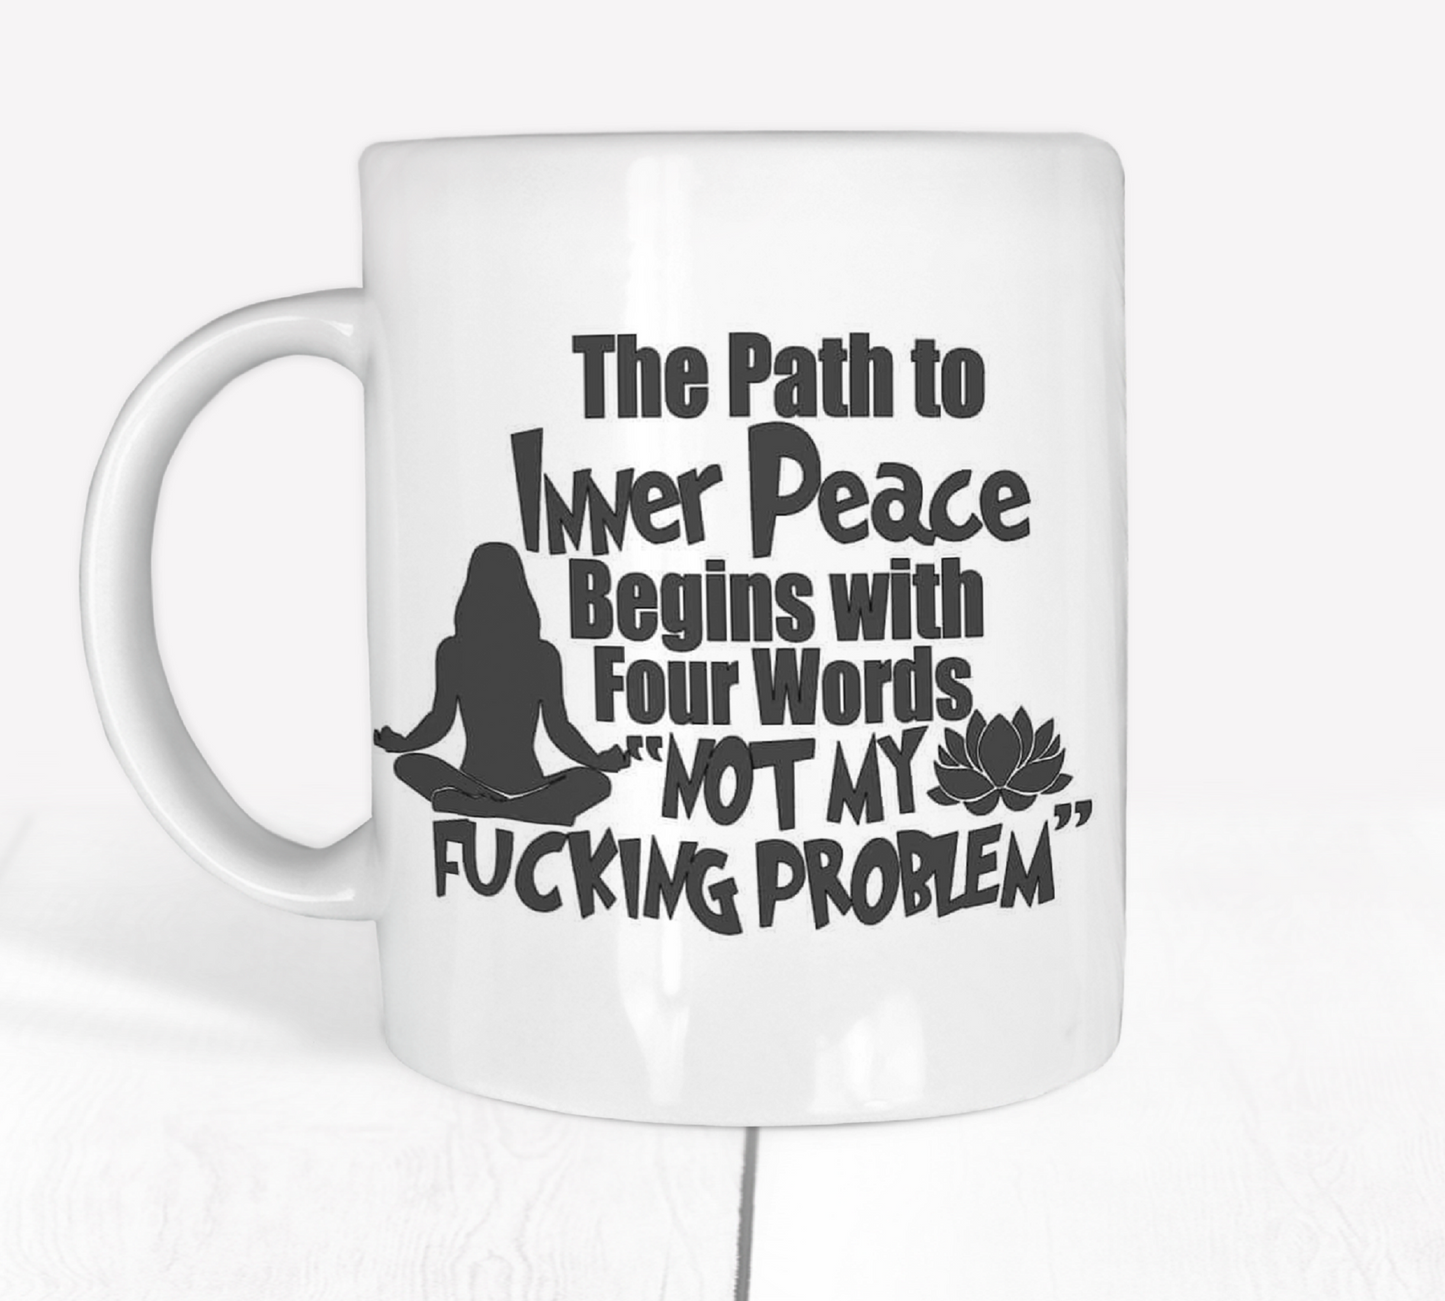  Not My F**king Problem Coffee Mug by Free Spirit Accessories sold by Free Spirit Accessories